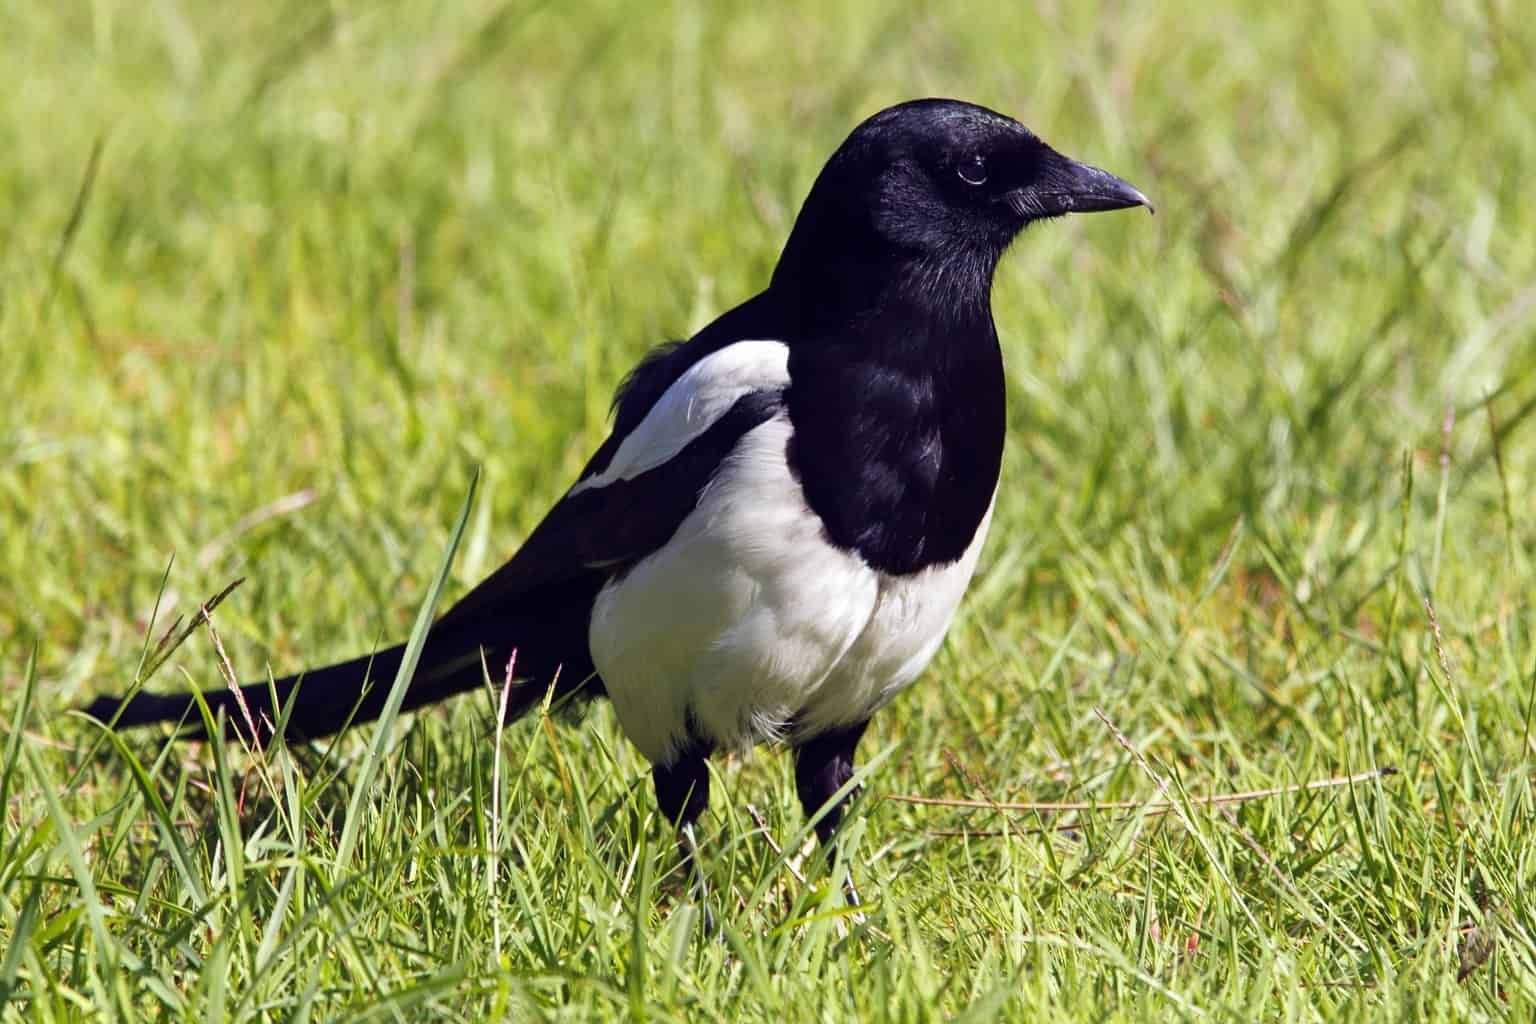 Black-billed Magpies